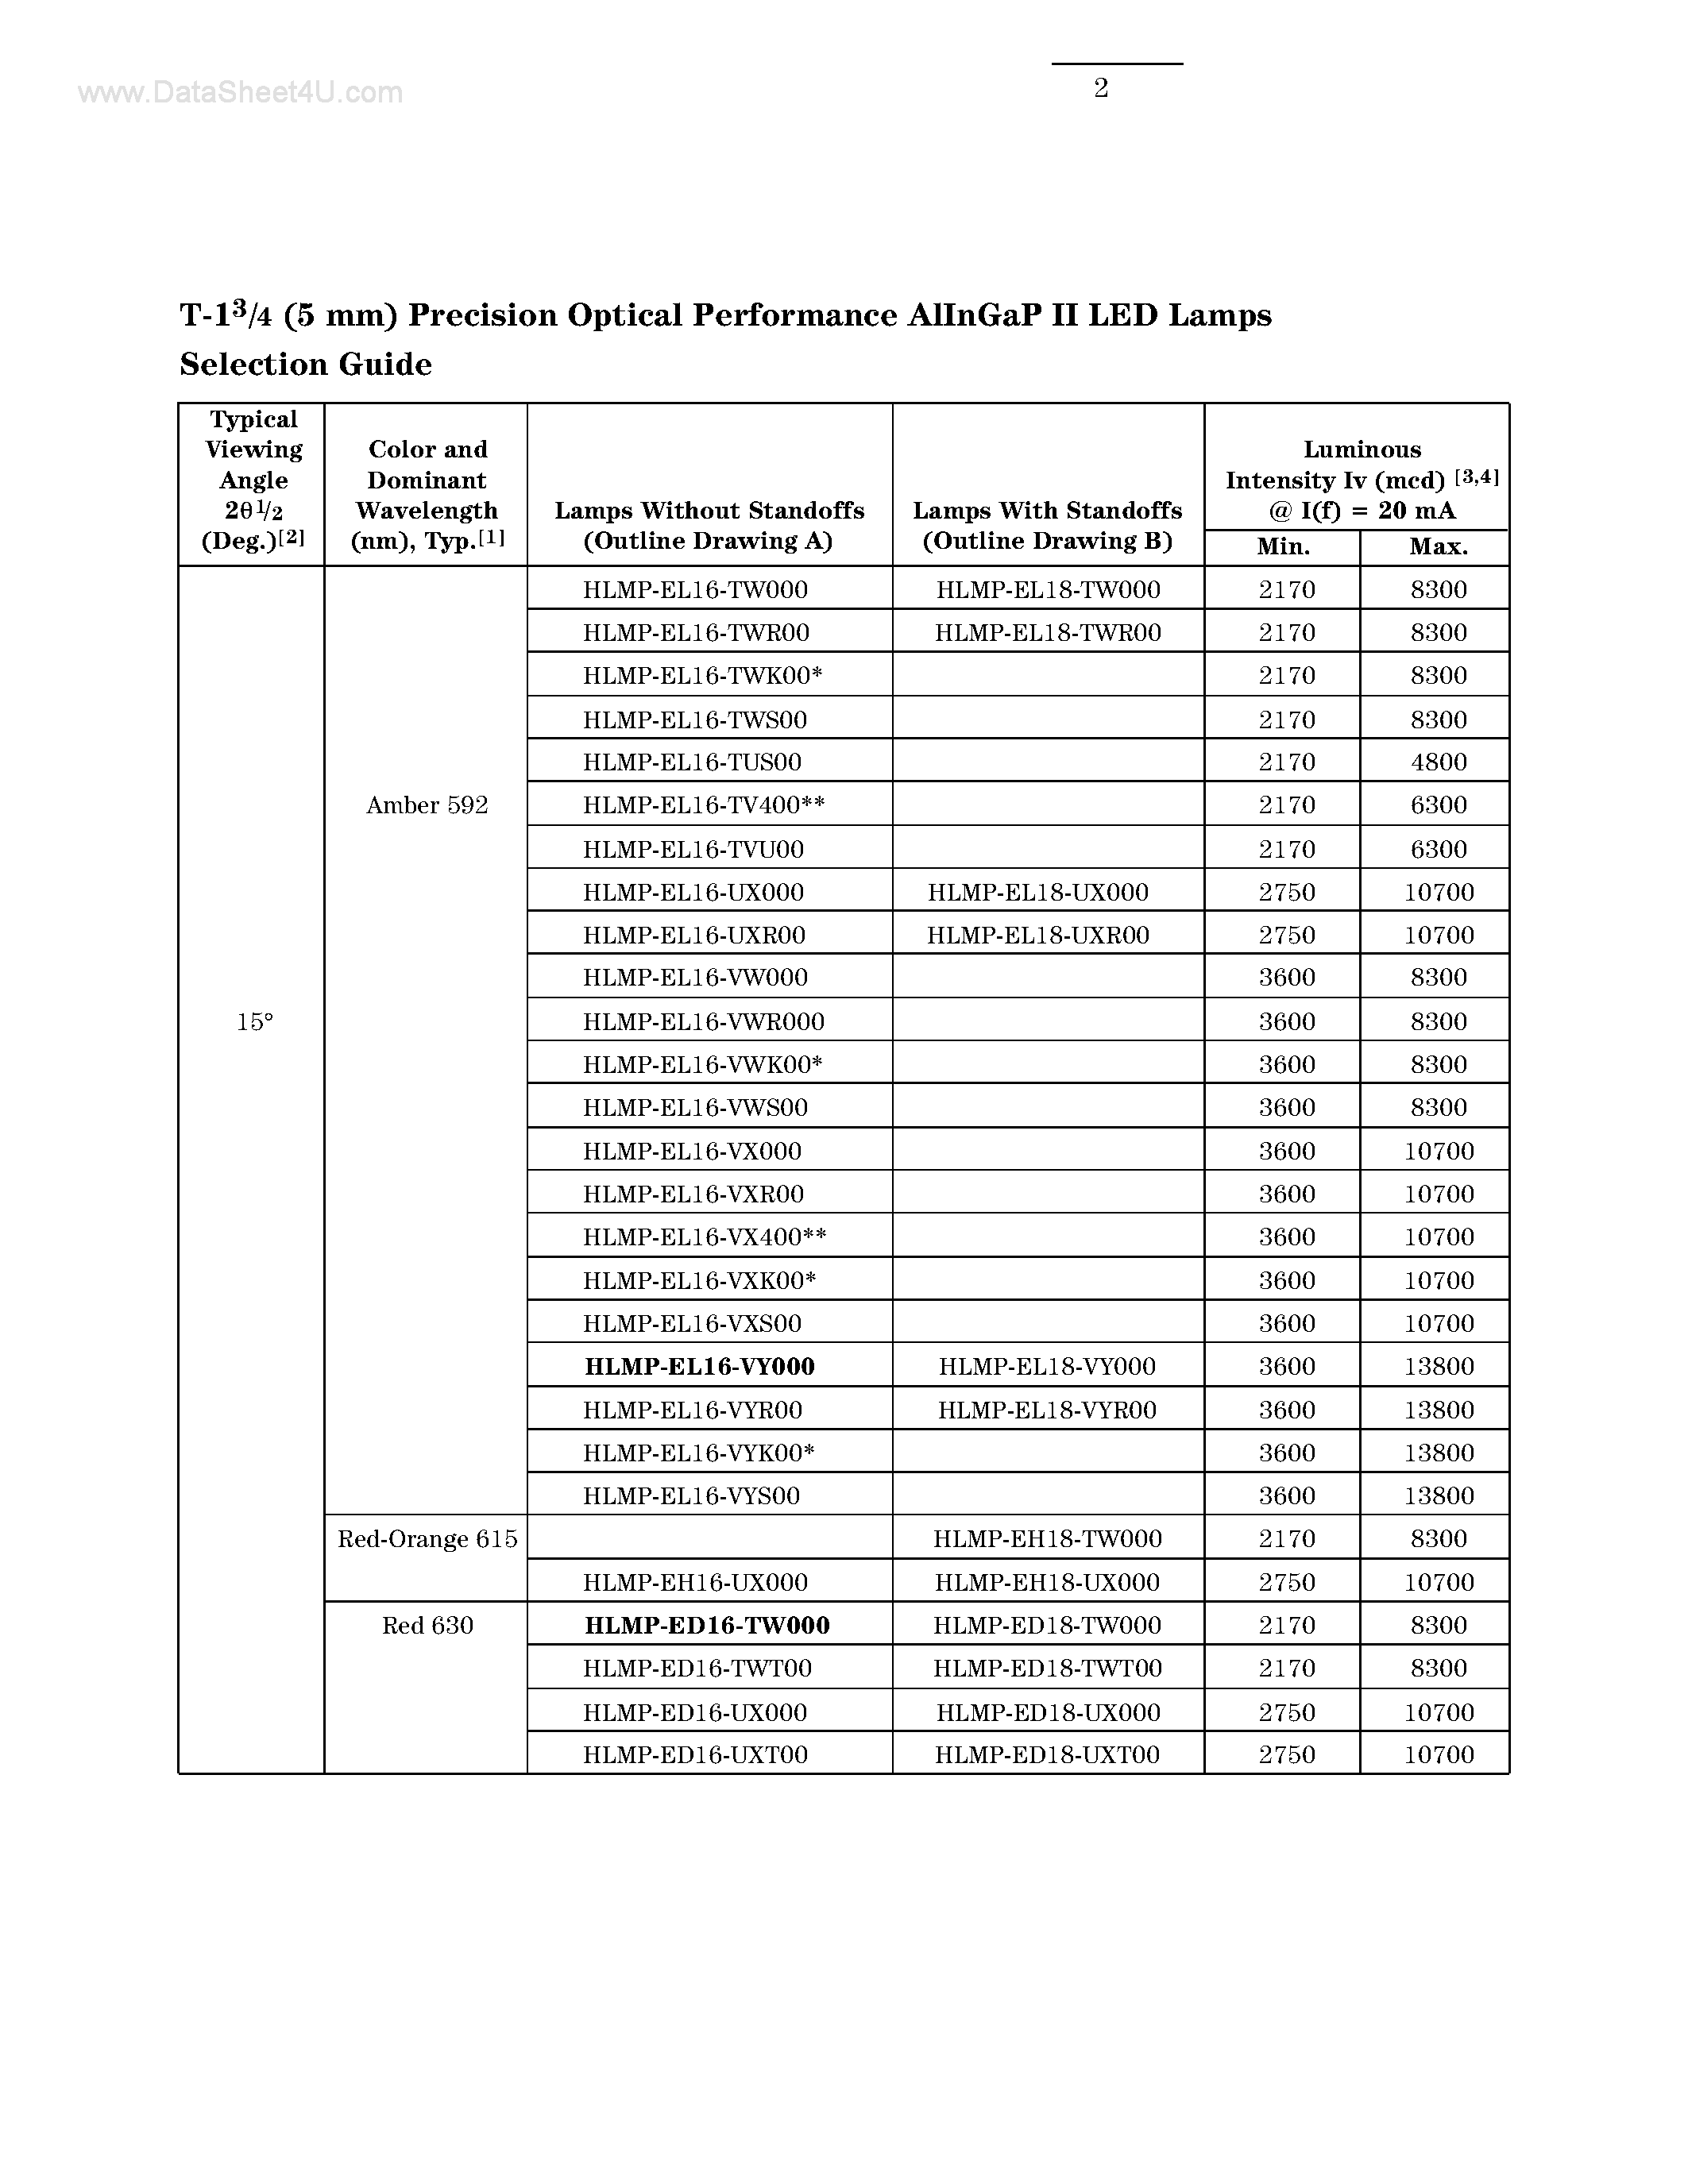 Datasheet HLMP-EGxx - T-1 (5mm) Precision Optical Performance AlInGaP LED Lamps page 2